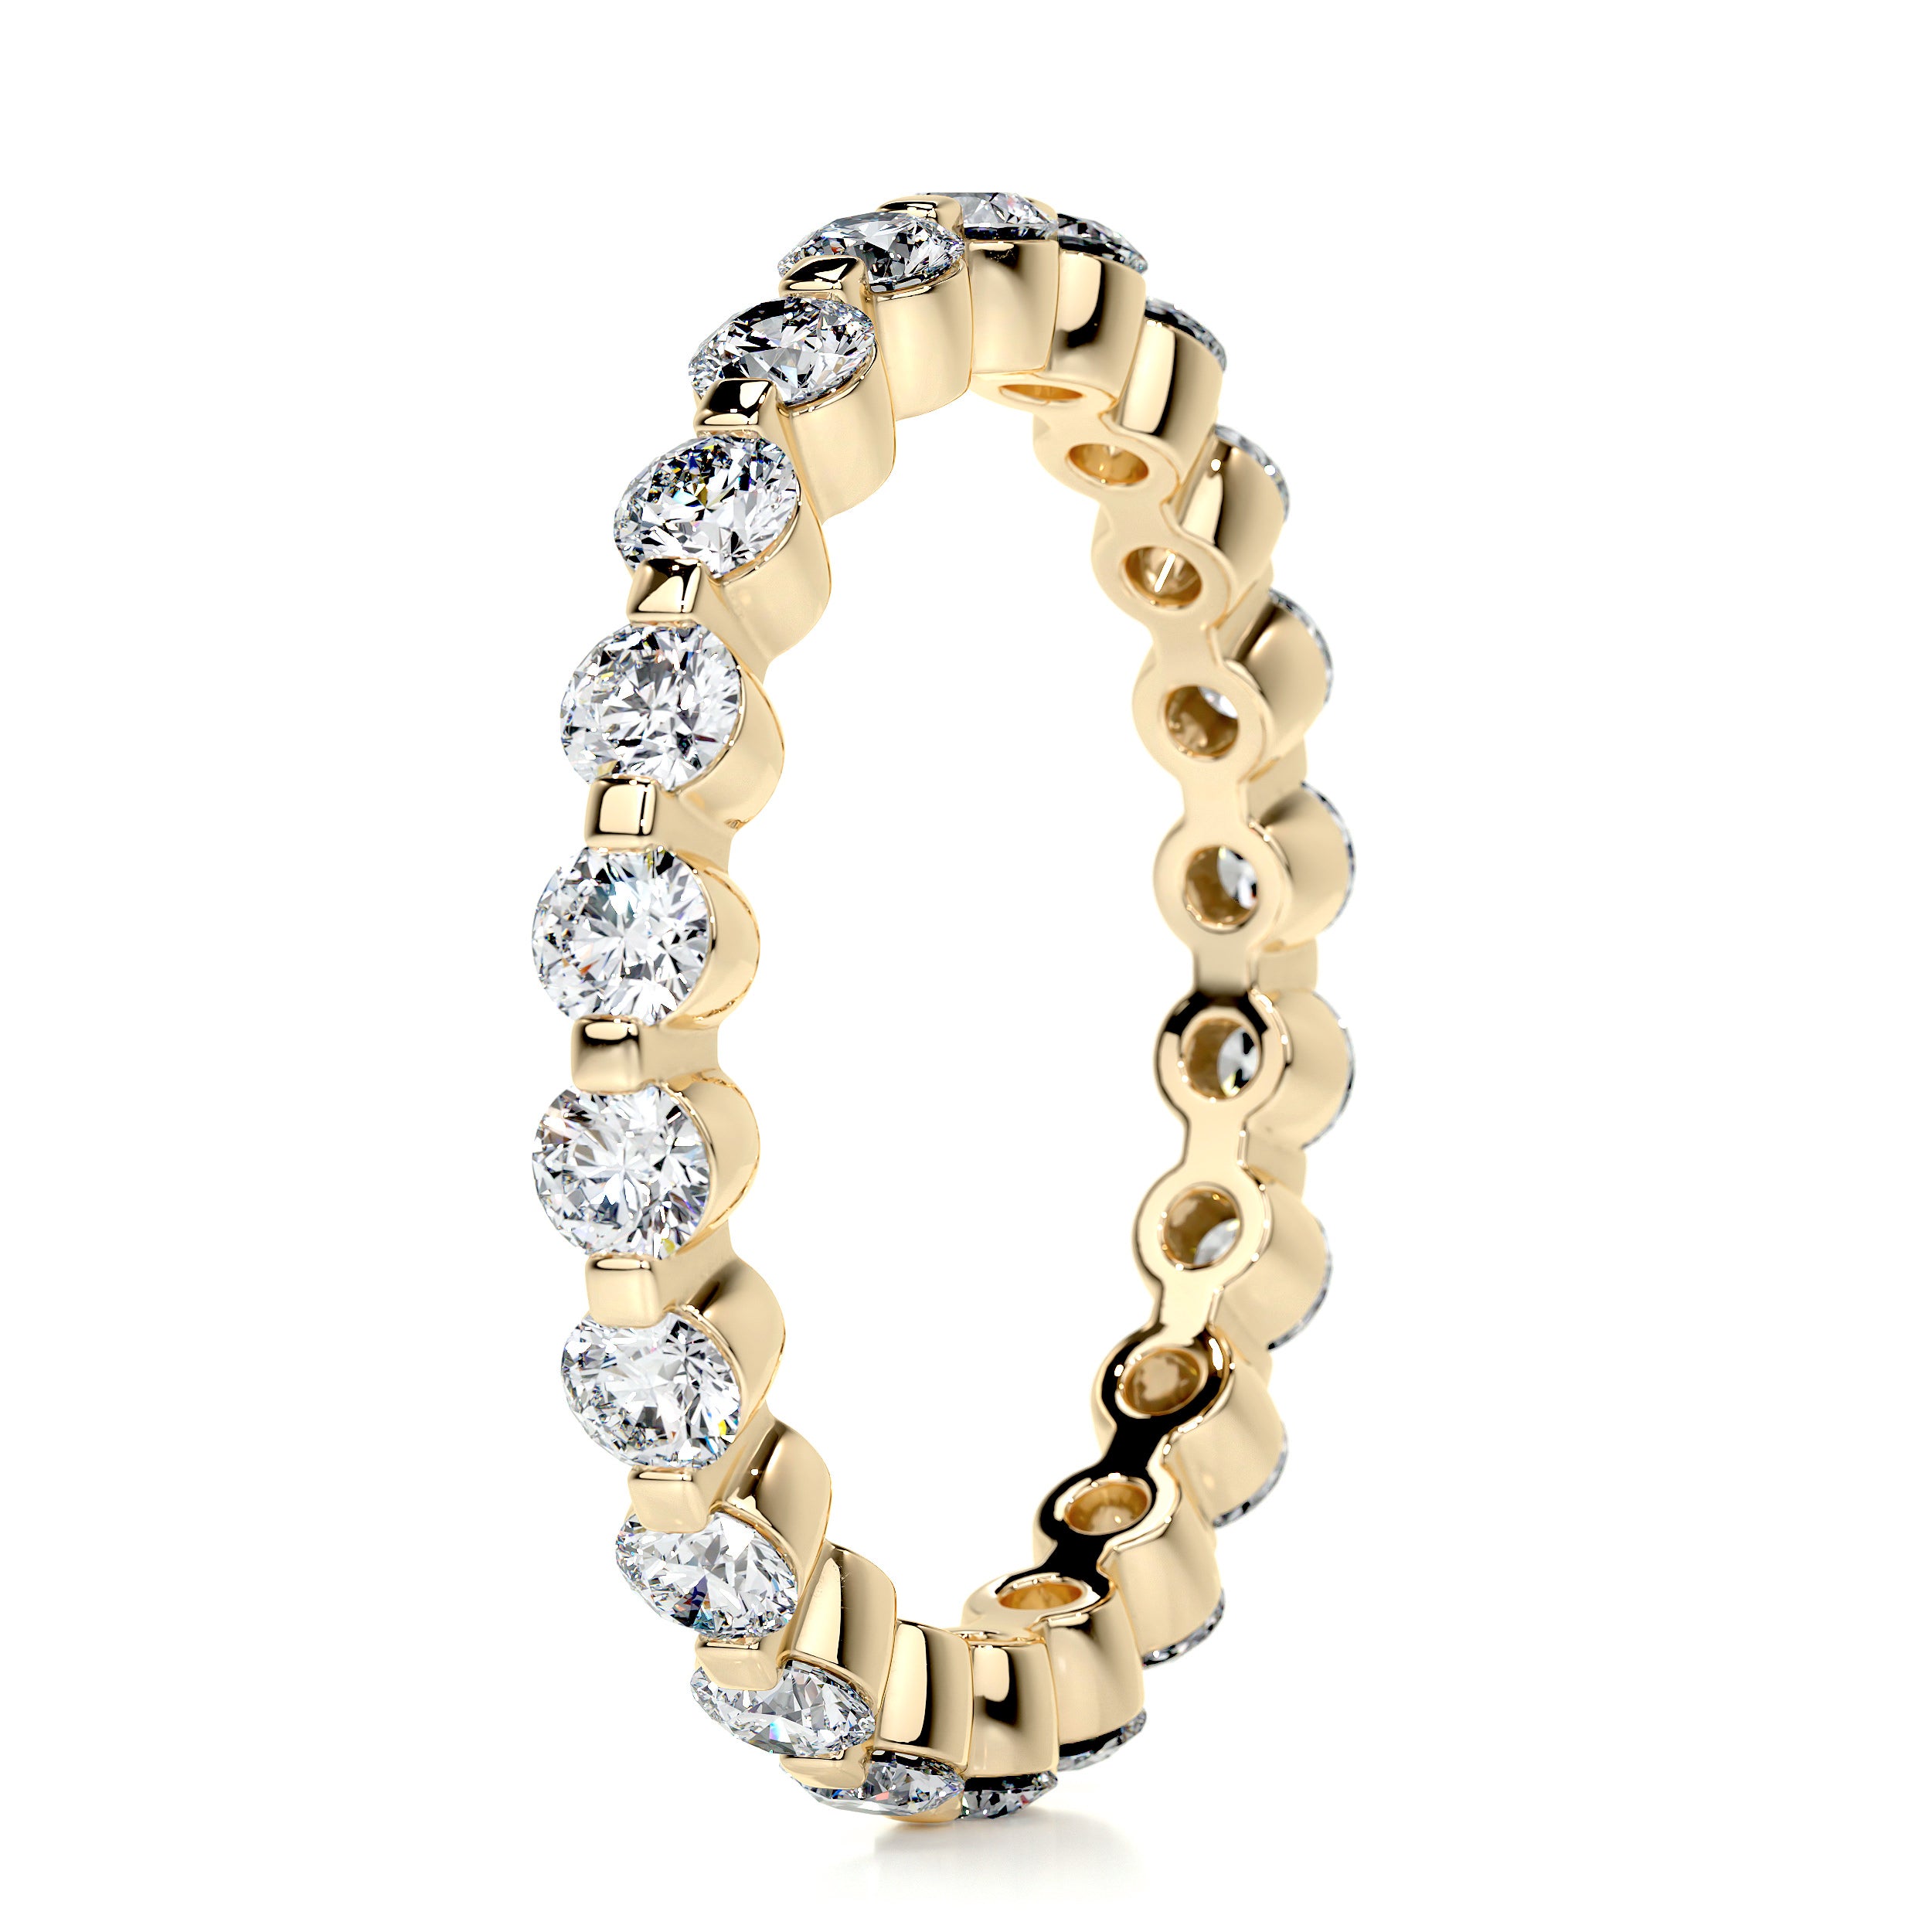 Josie Eternity Wedding Ring   (1 Carat) -18K Yellow Gold